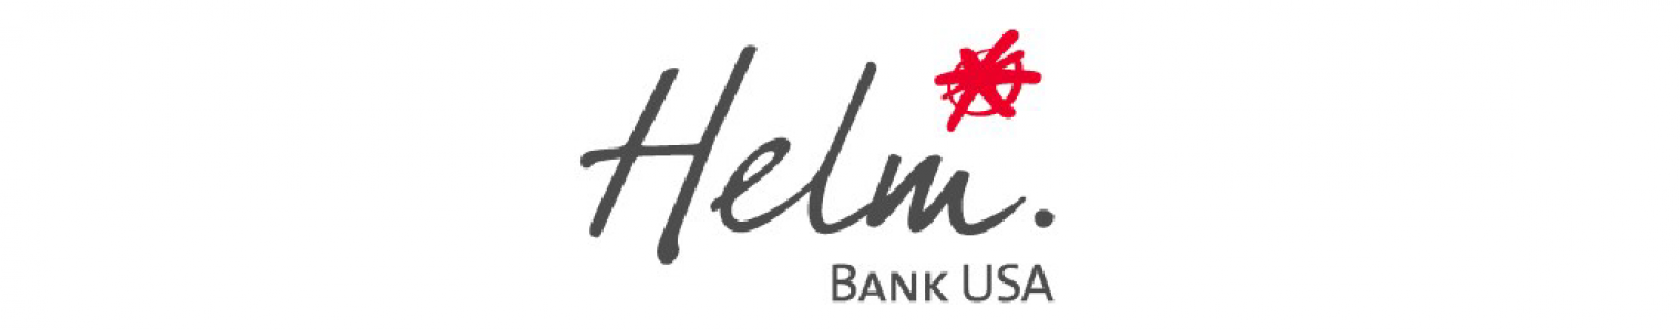 Helm-bank 2